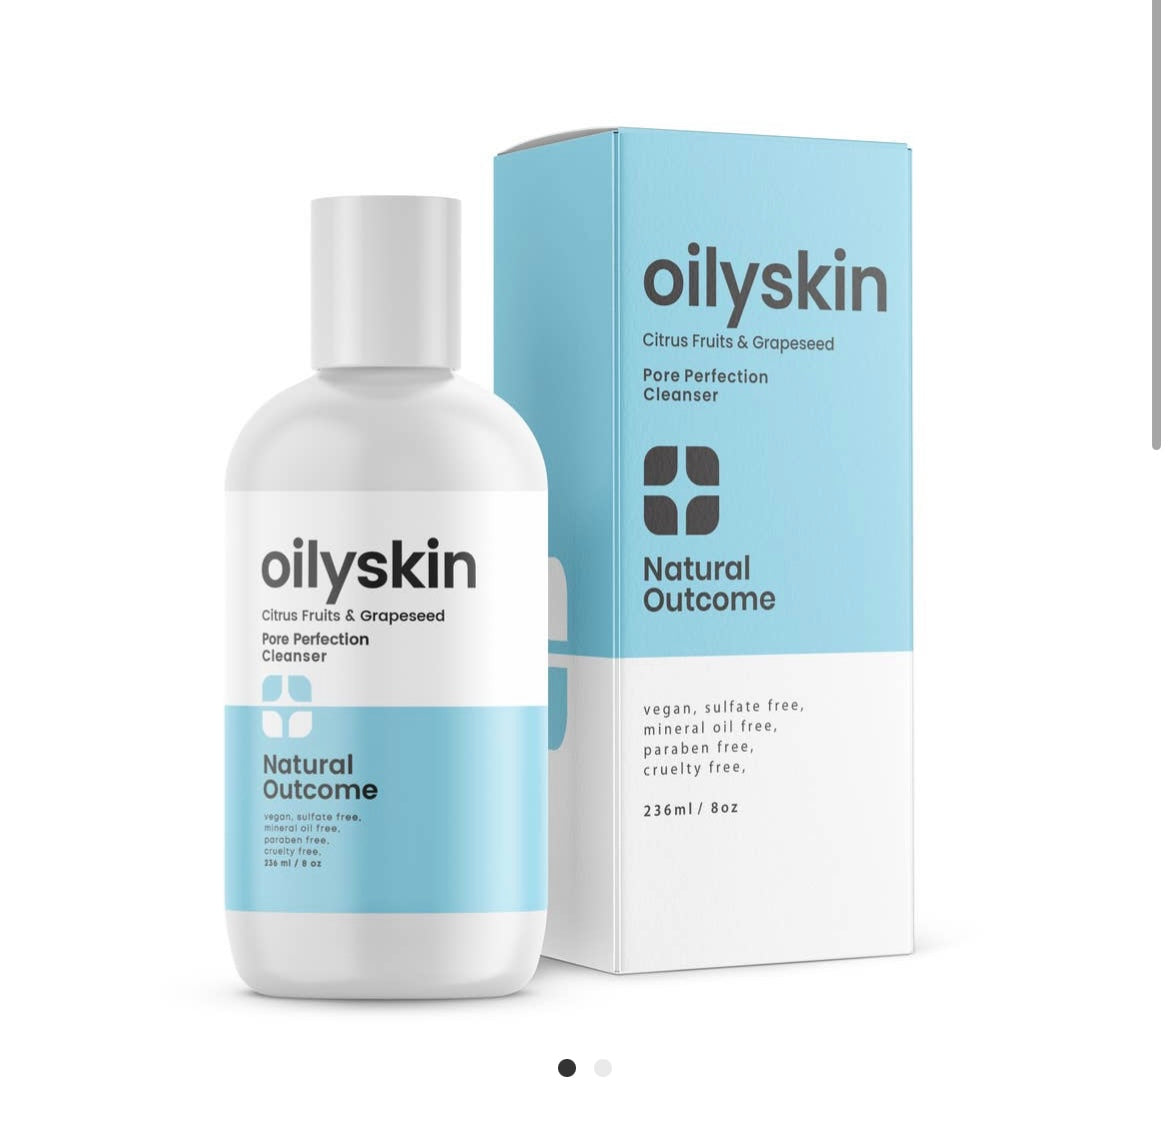 Oily skin cleanser